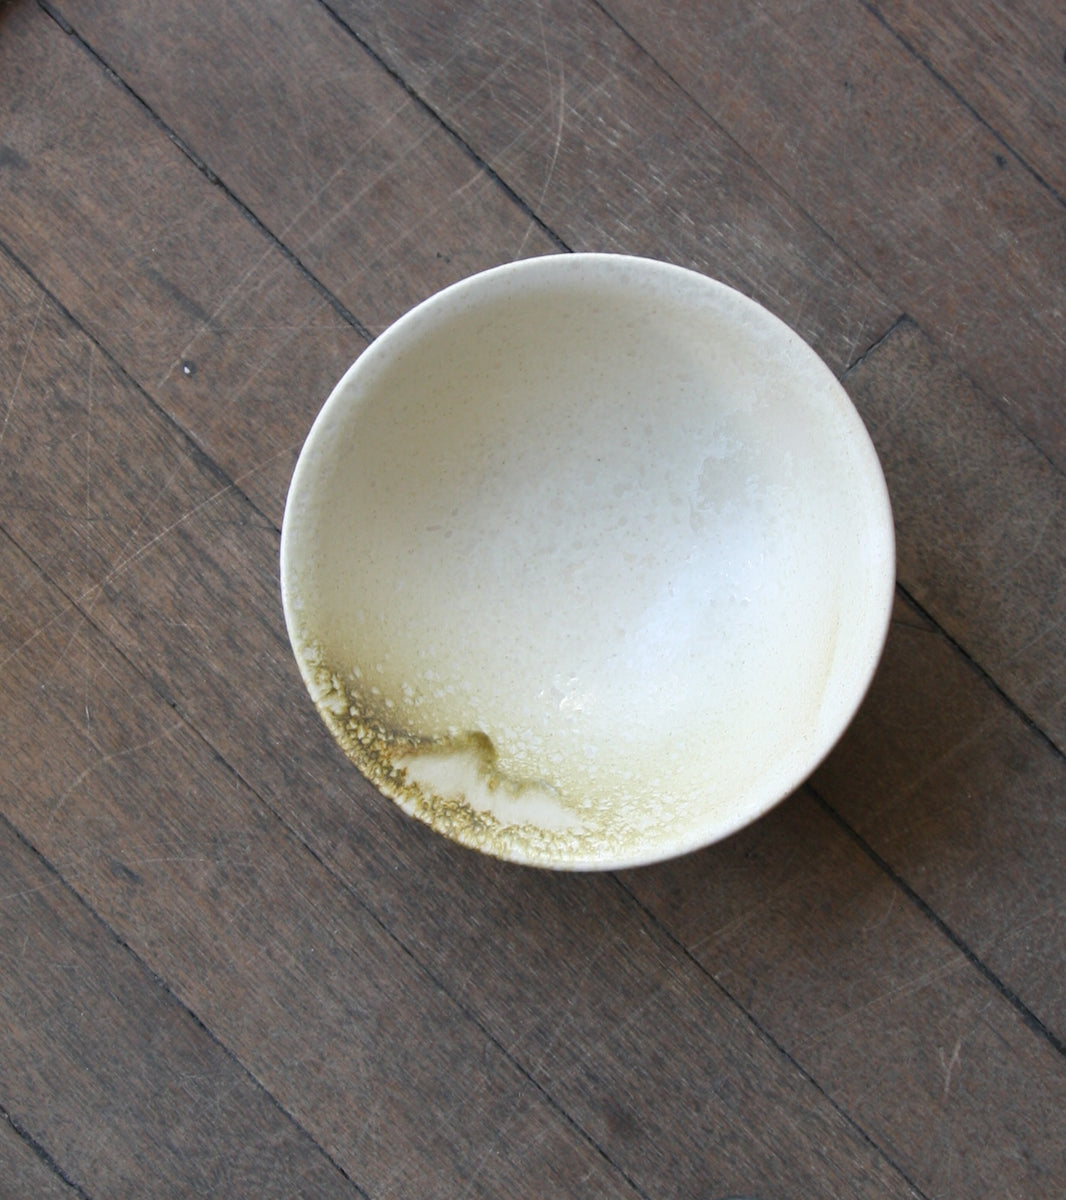 Medium Flat Out Bowl White and Yellow Glaze Kasper Würtz - Image 4